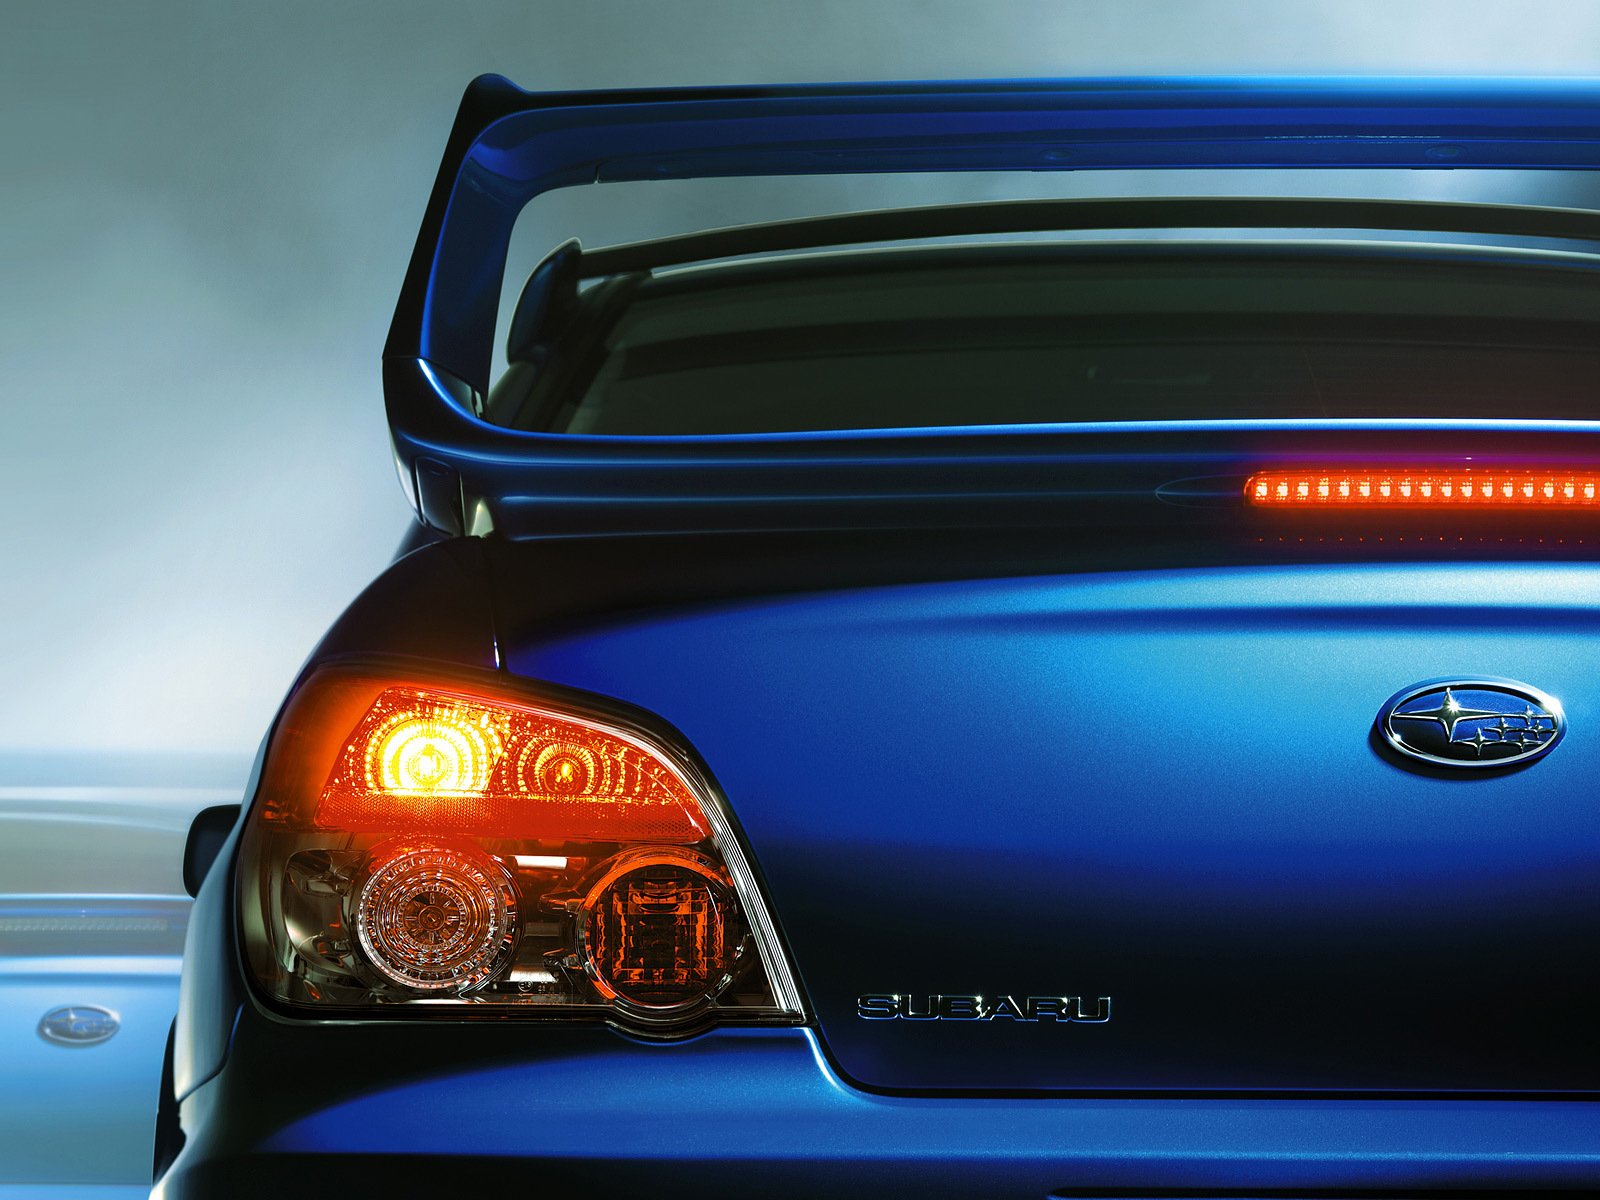 Subaru Wallpaper and Background Image | 1600x1200 | ID ...